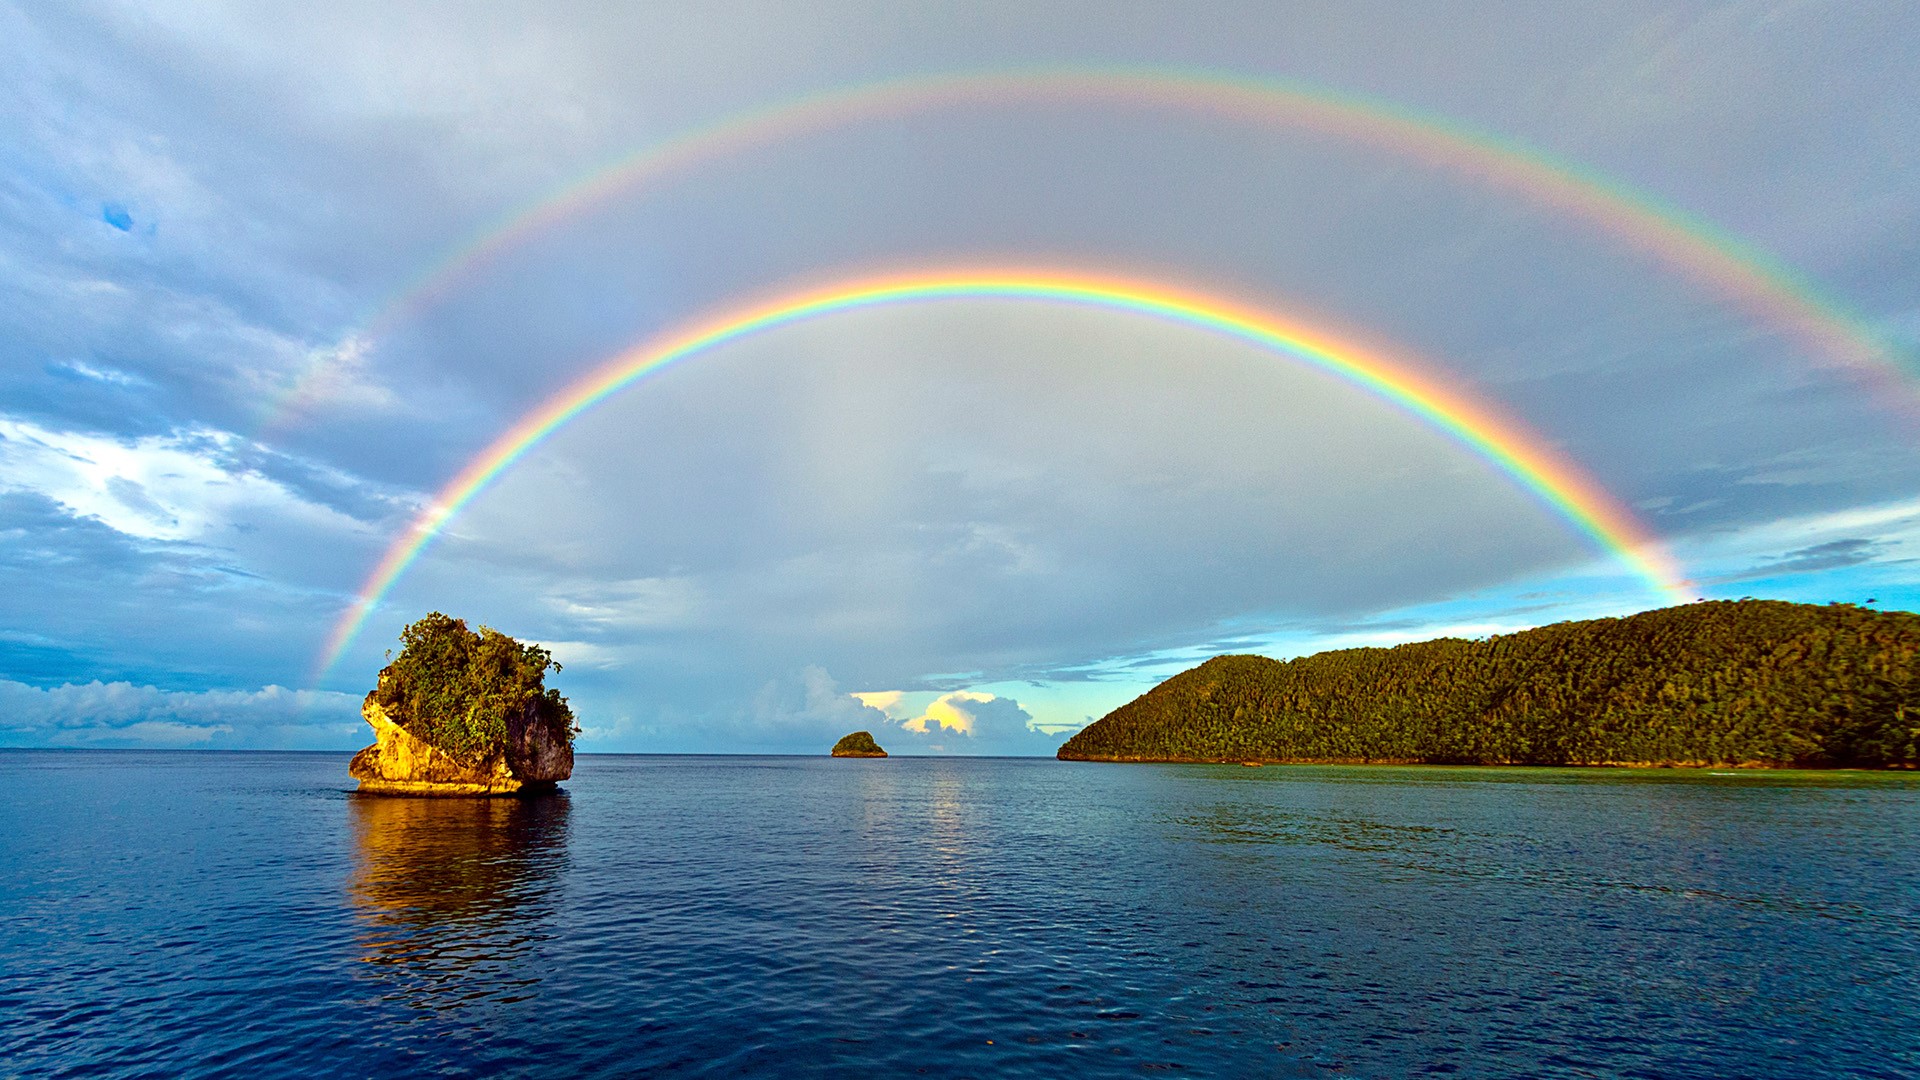 Double rainbow at Misool island, West Papua, New Guinea, Indonesia. Windows 10 Spotlight Image